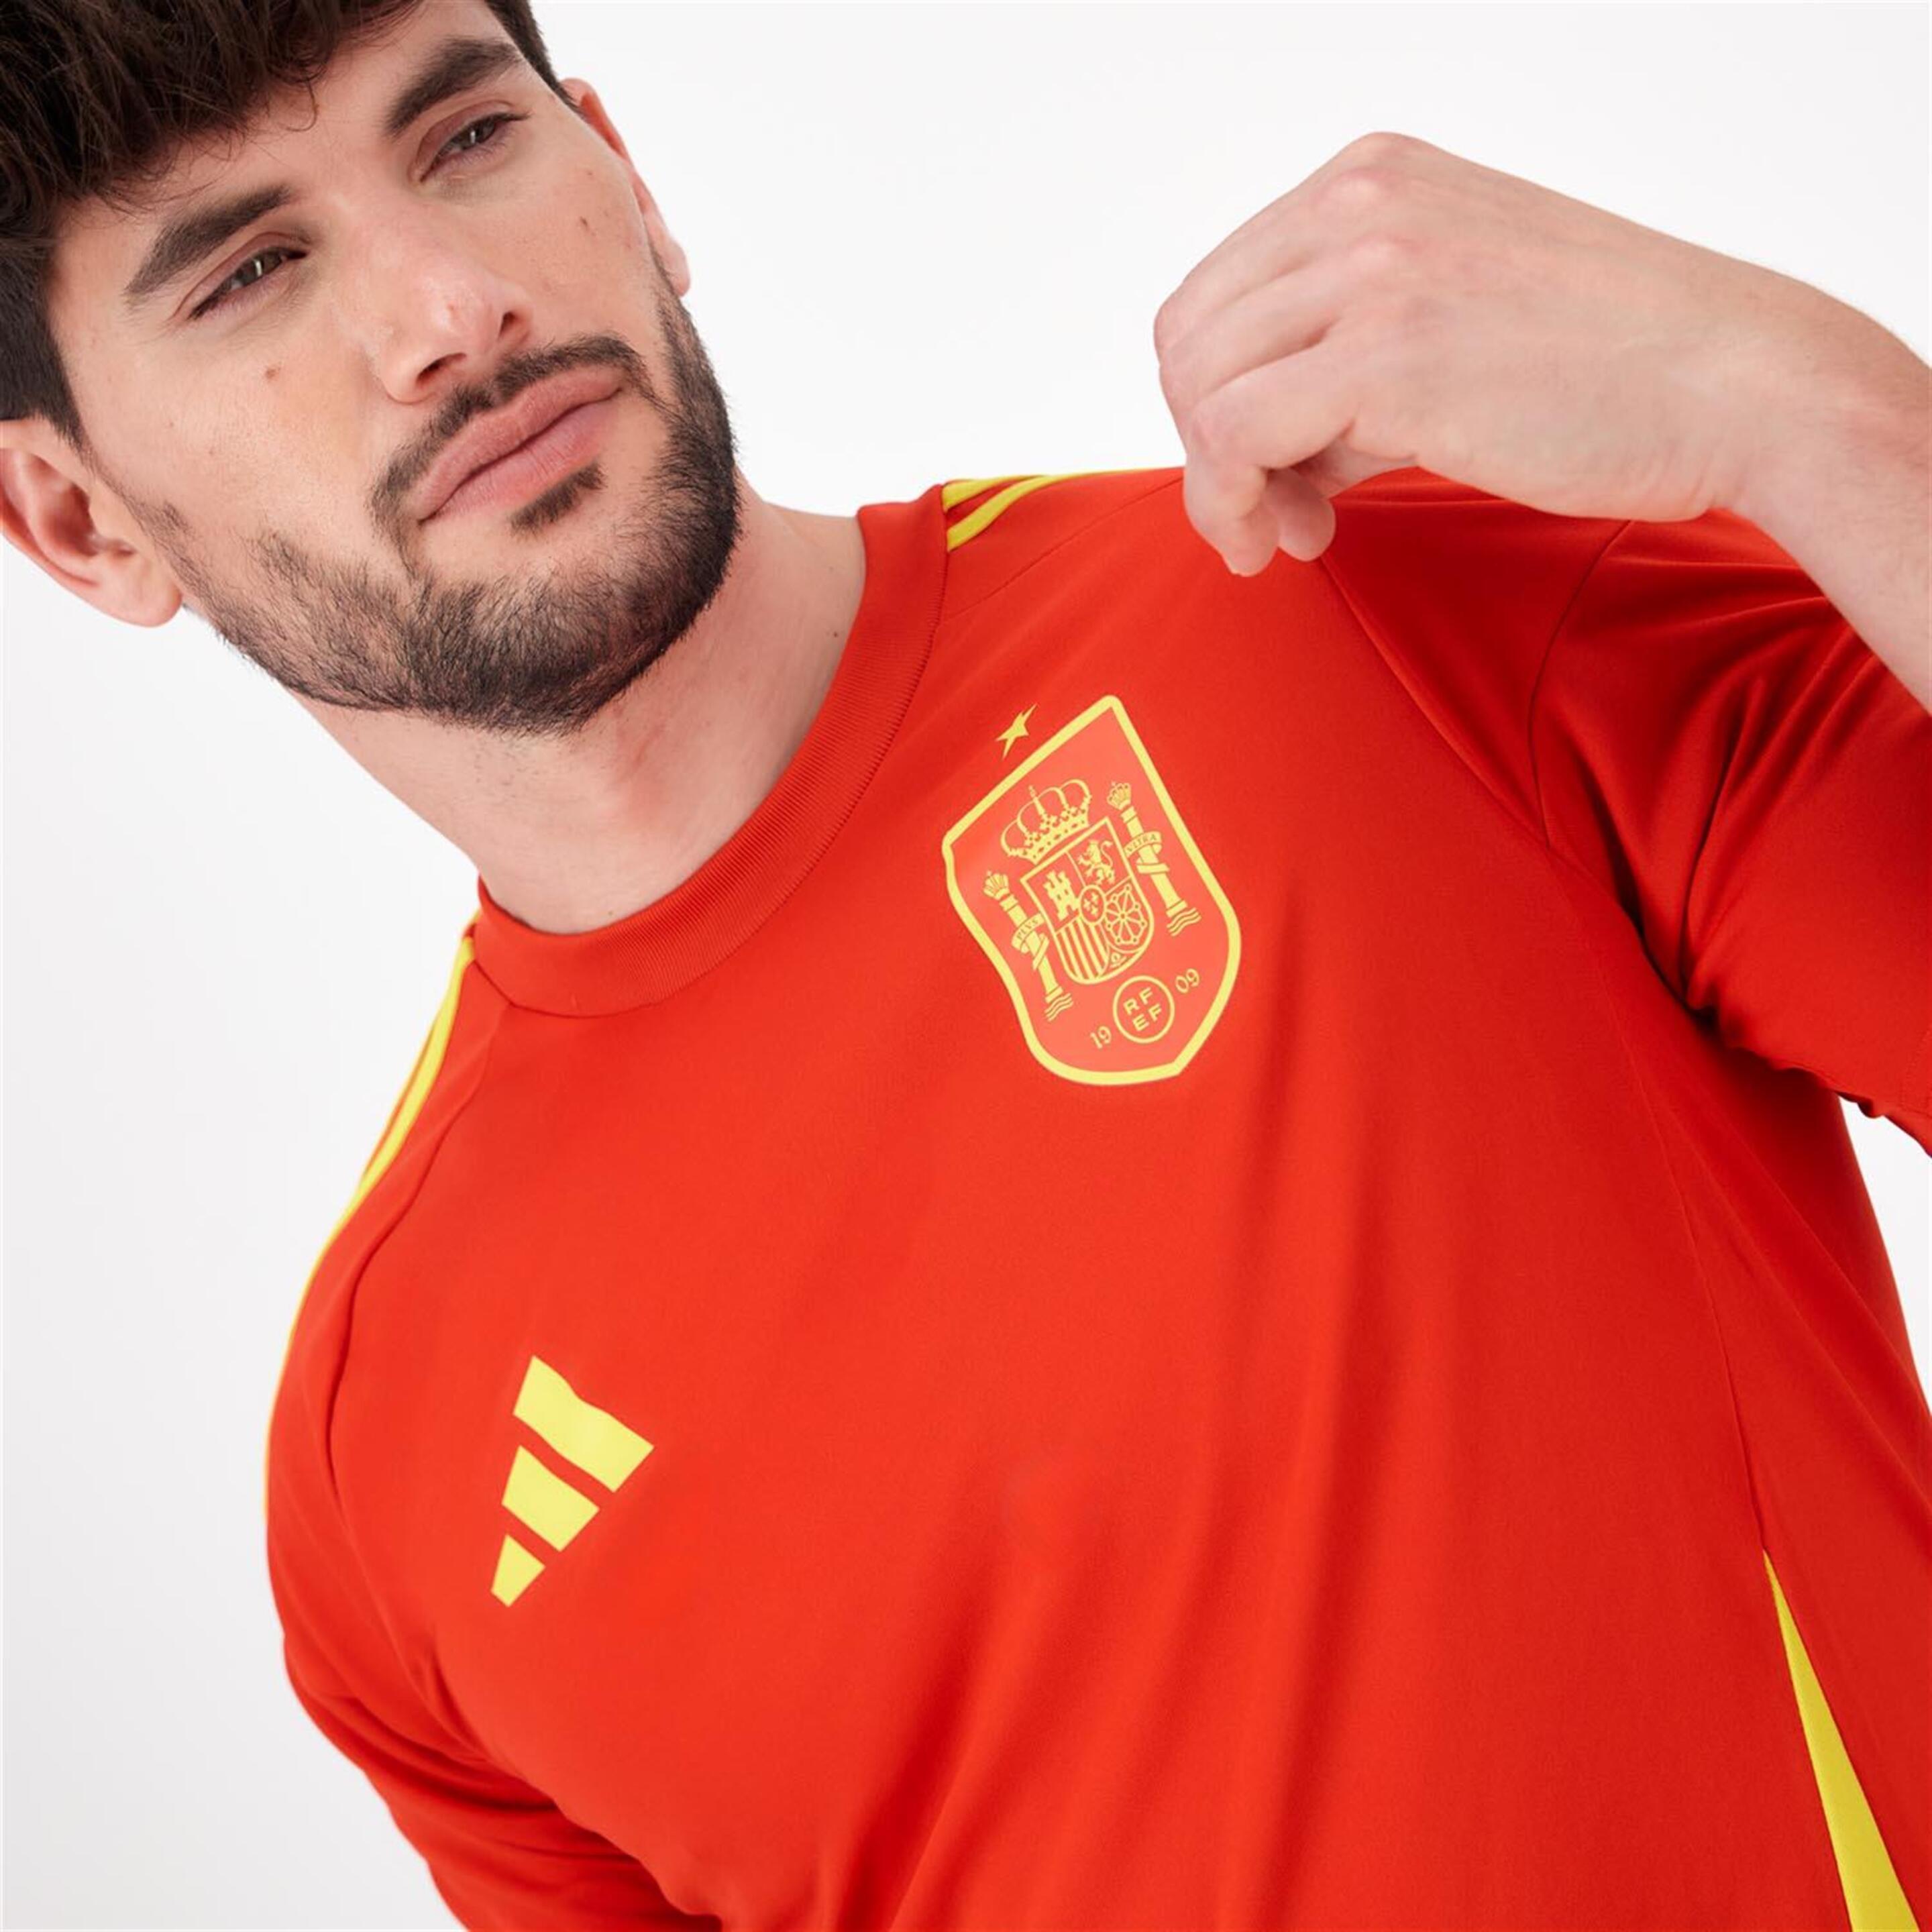 Camiseta España 2ª Equip. 24/25 - Rojo - Fútbol Hombre